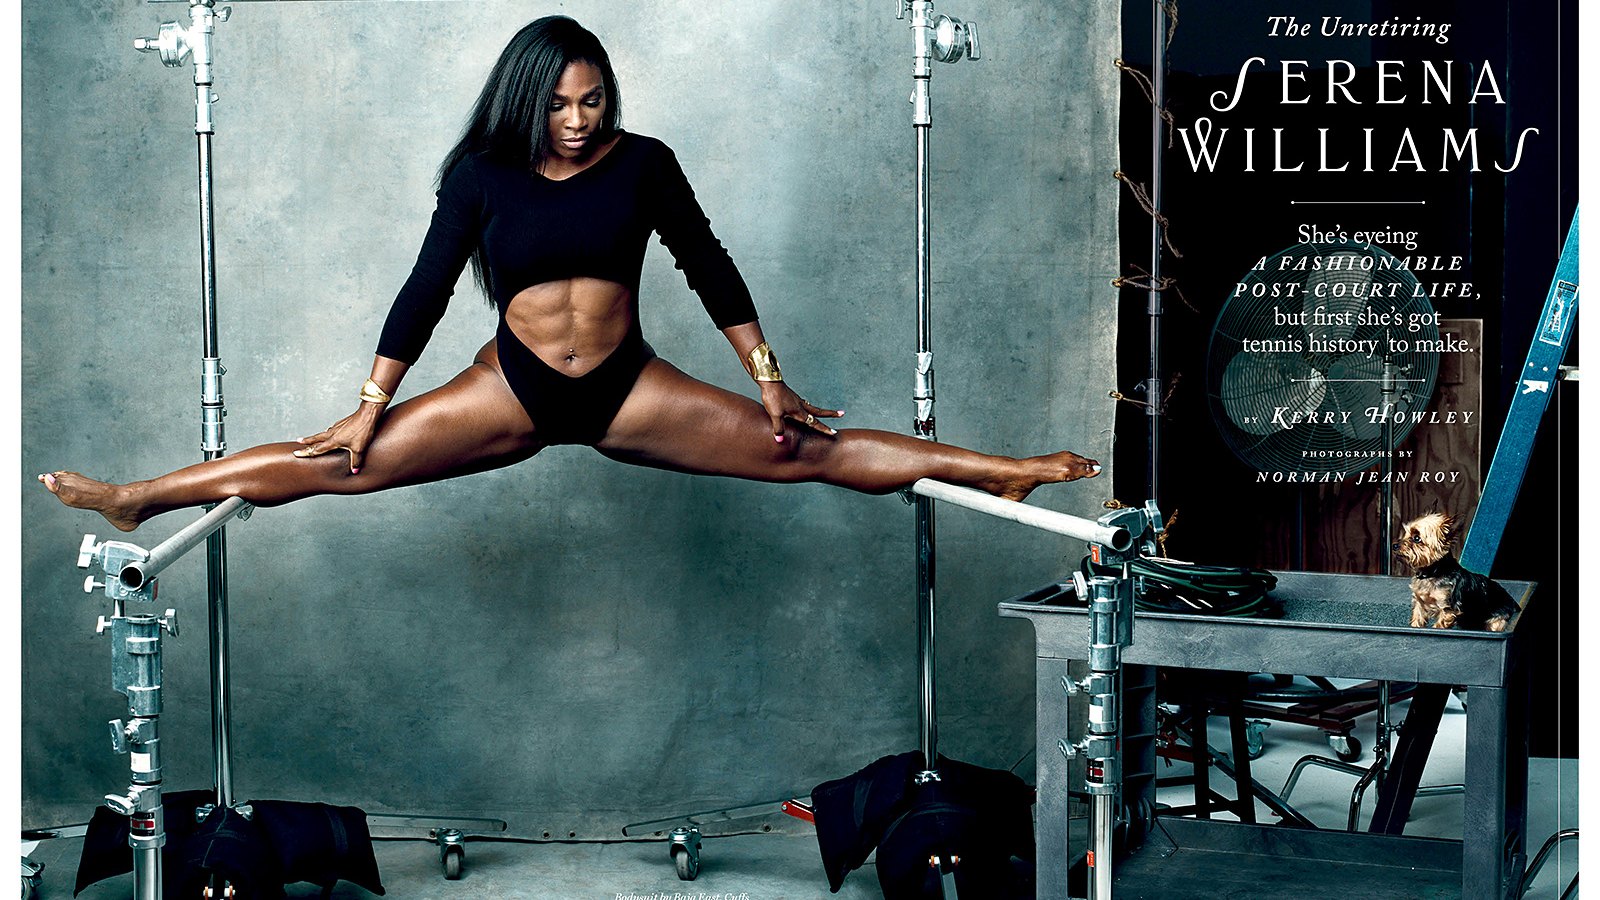 Serena Williams shows off her insane body for New York Magazine